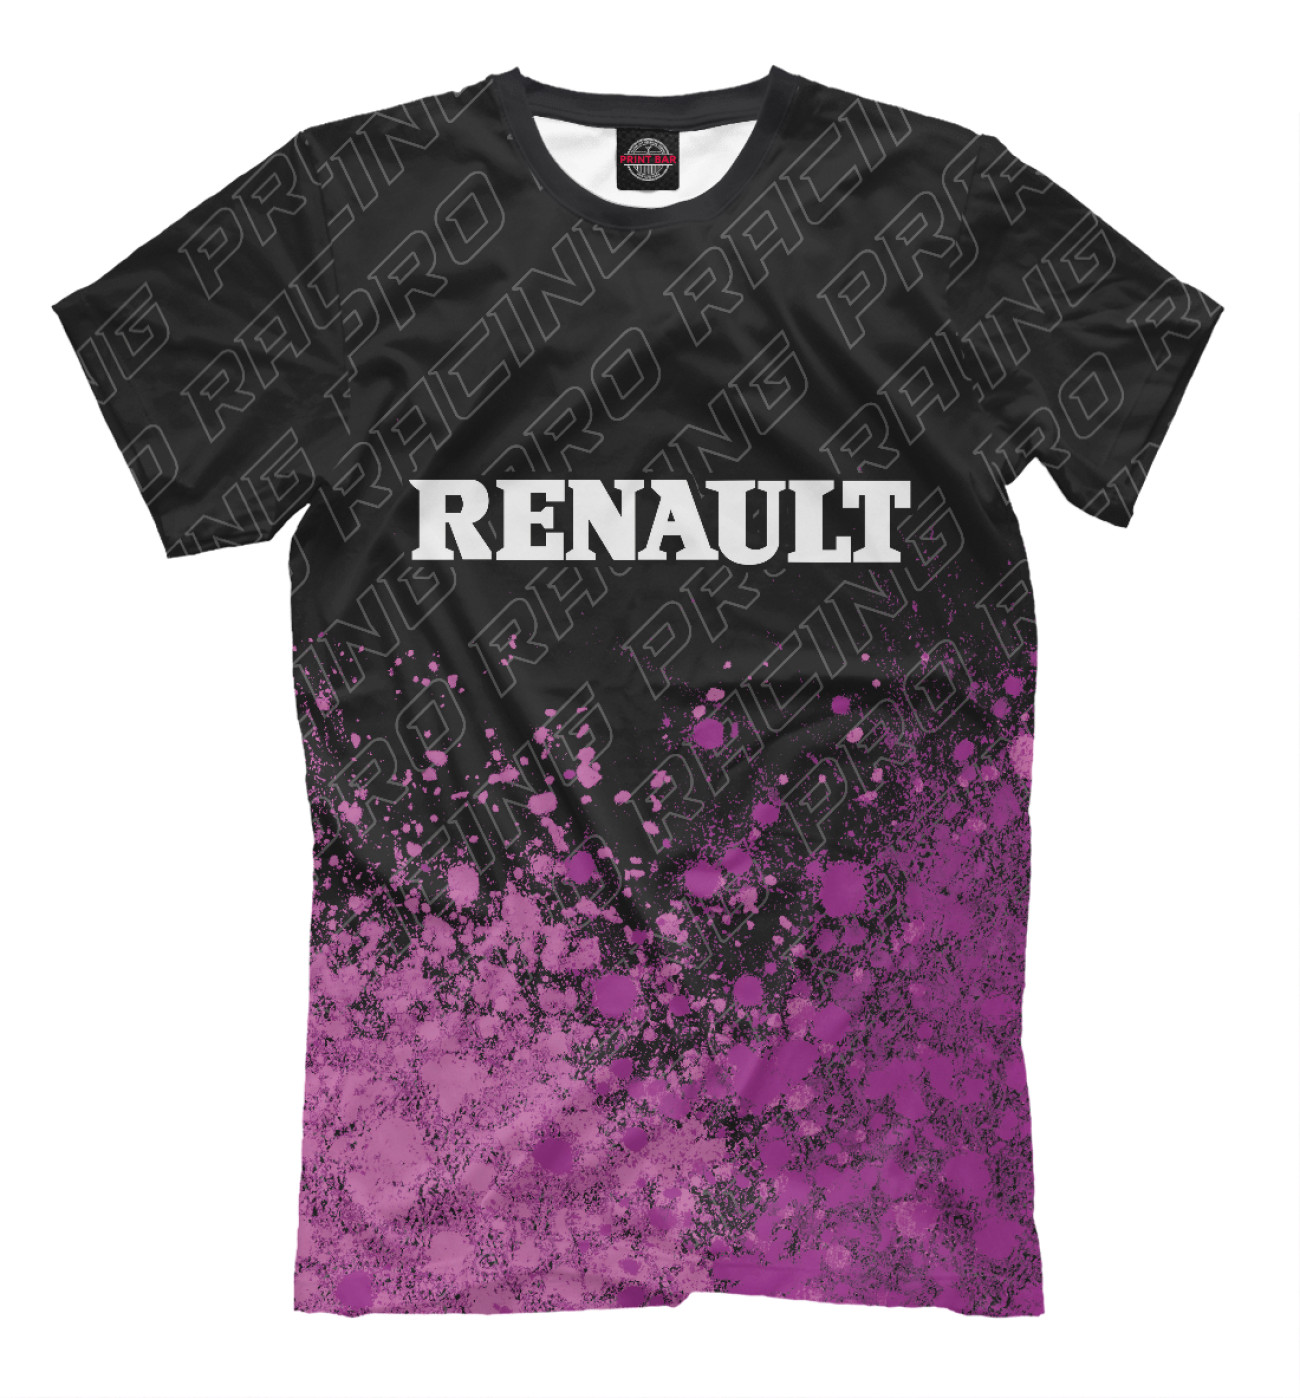 Мужская Футболка Renault Pro Racing, артикул: REN-444499-fut-2